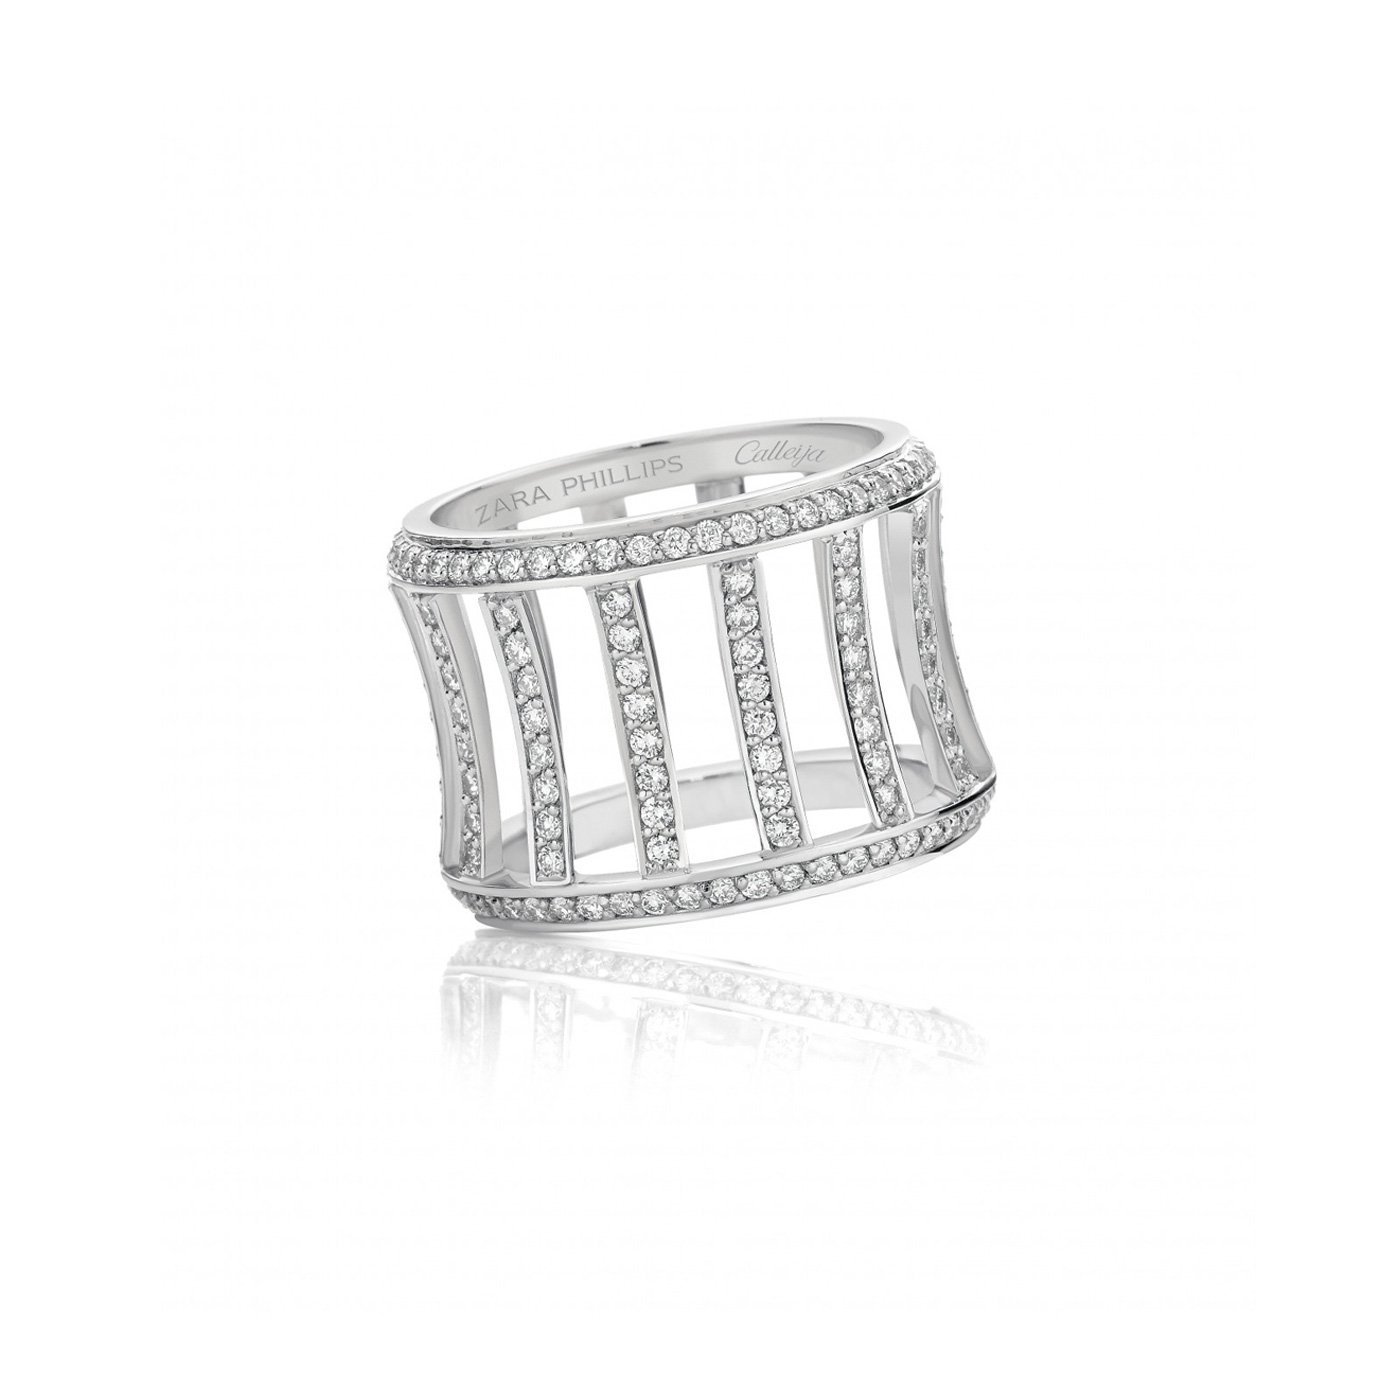 Calleija Coronet Grande Ring in White Gold and White Diamond.jpg